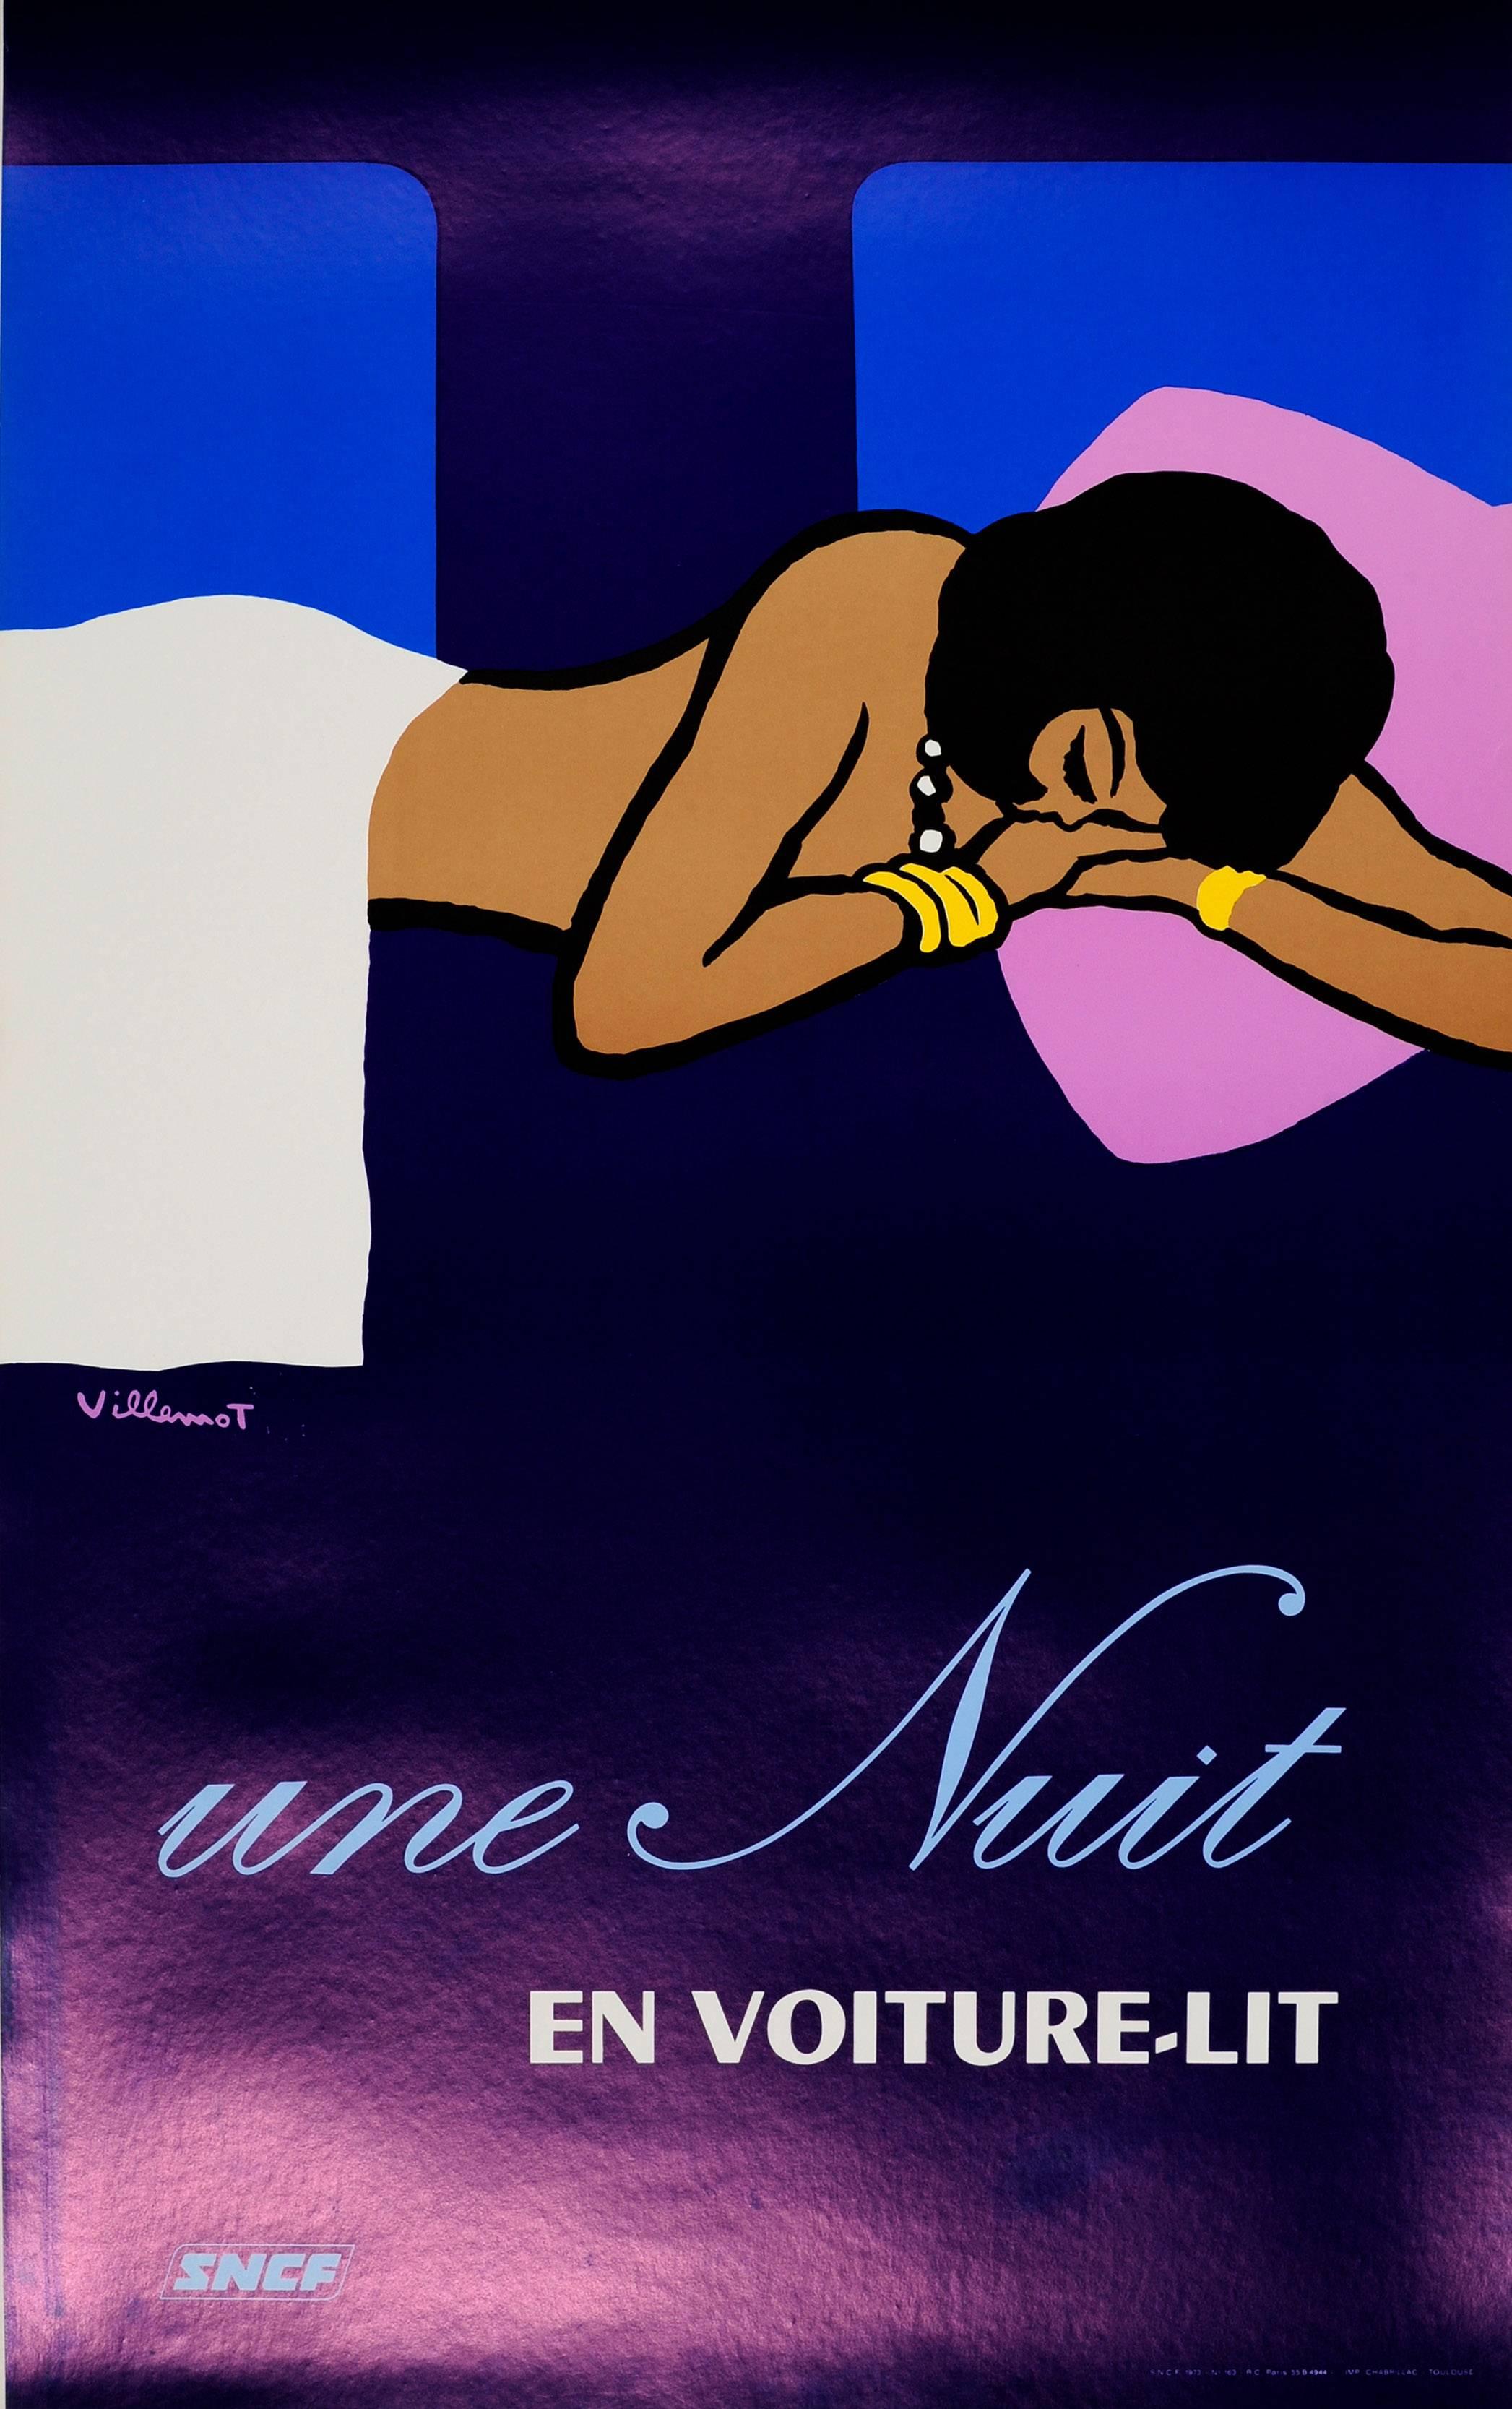 Bernard Villemot Nude Print - Original Vintage SNCF Railway Travel Advertising Poster: Une Nuit En Voiture-Lit